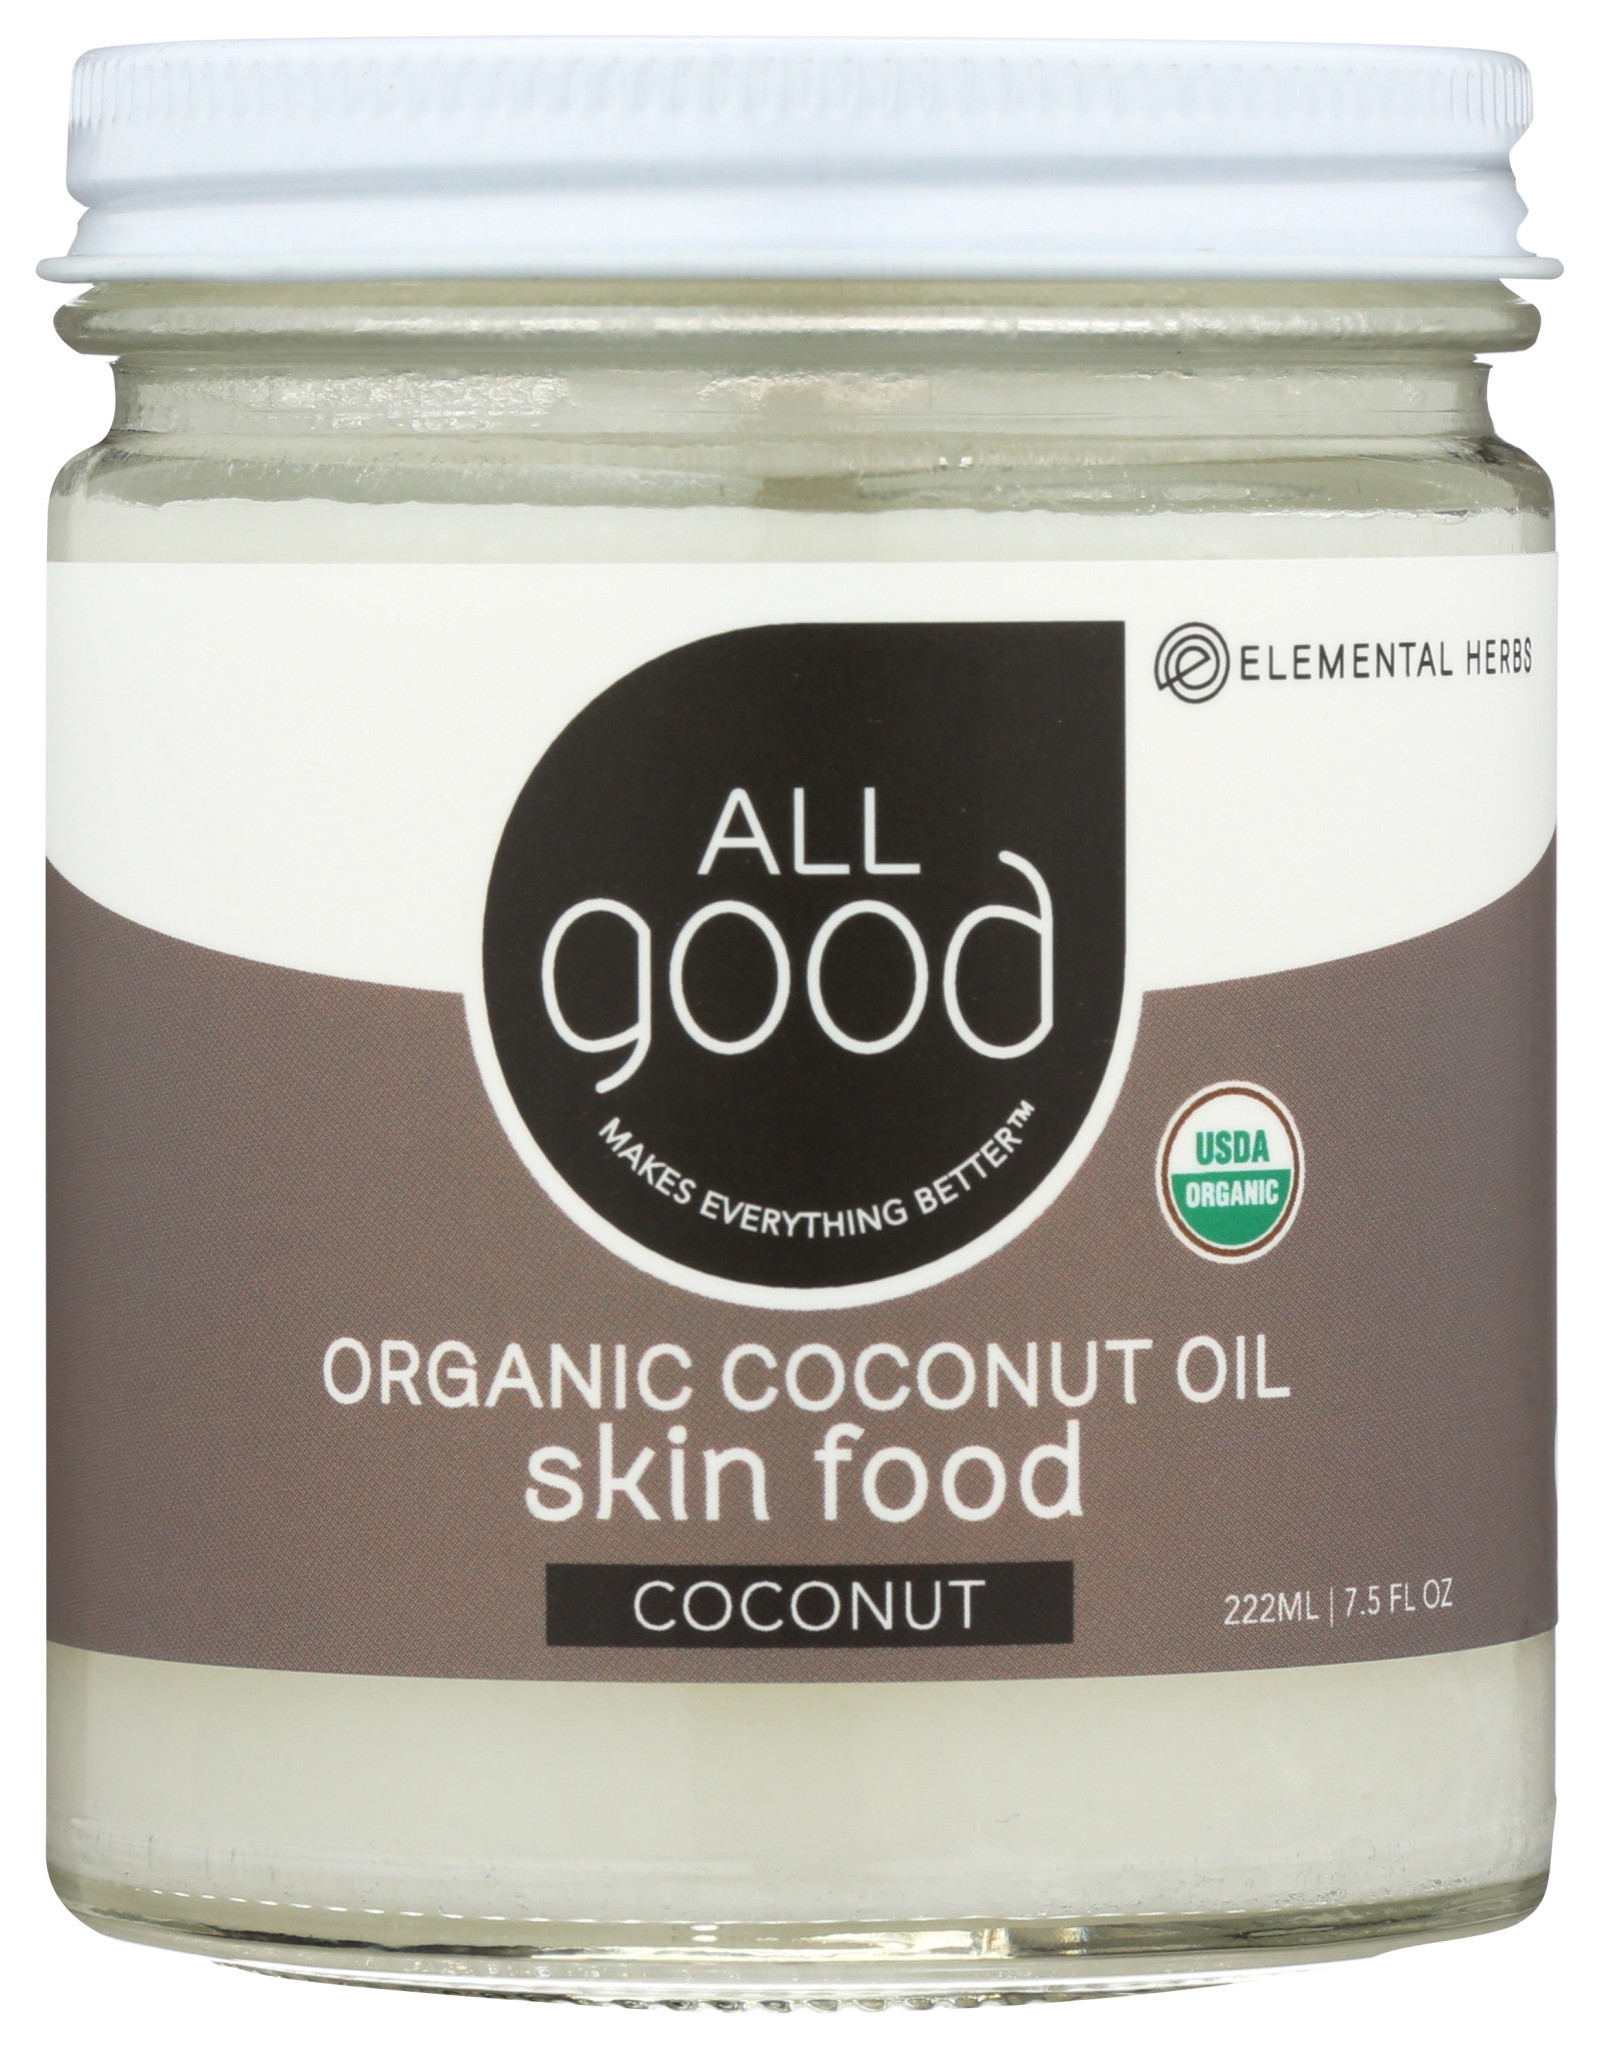 All Good Organic Coconut Oil Skin Food Coconut